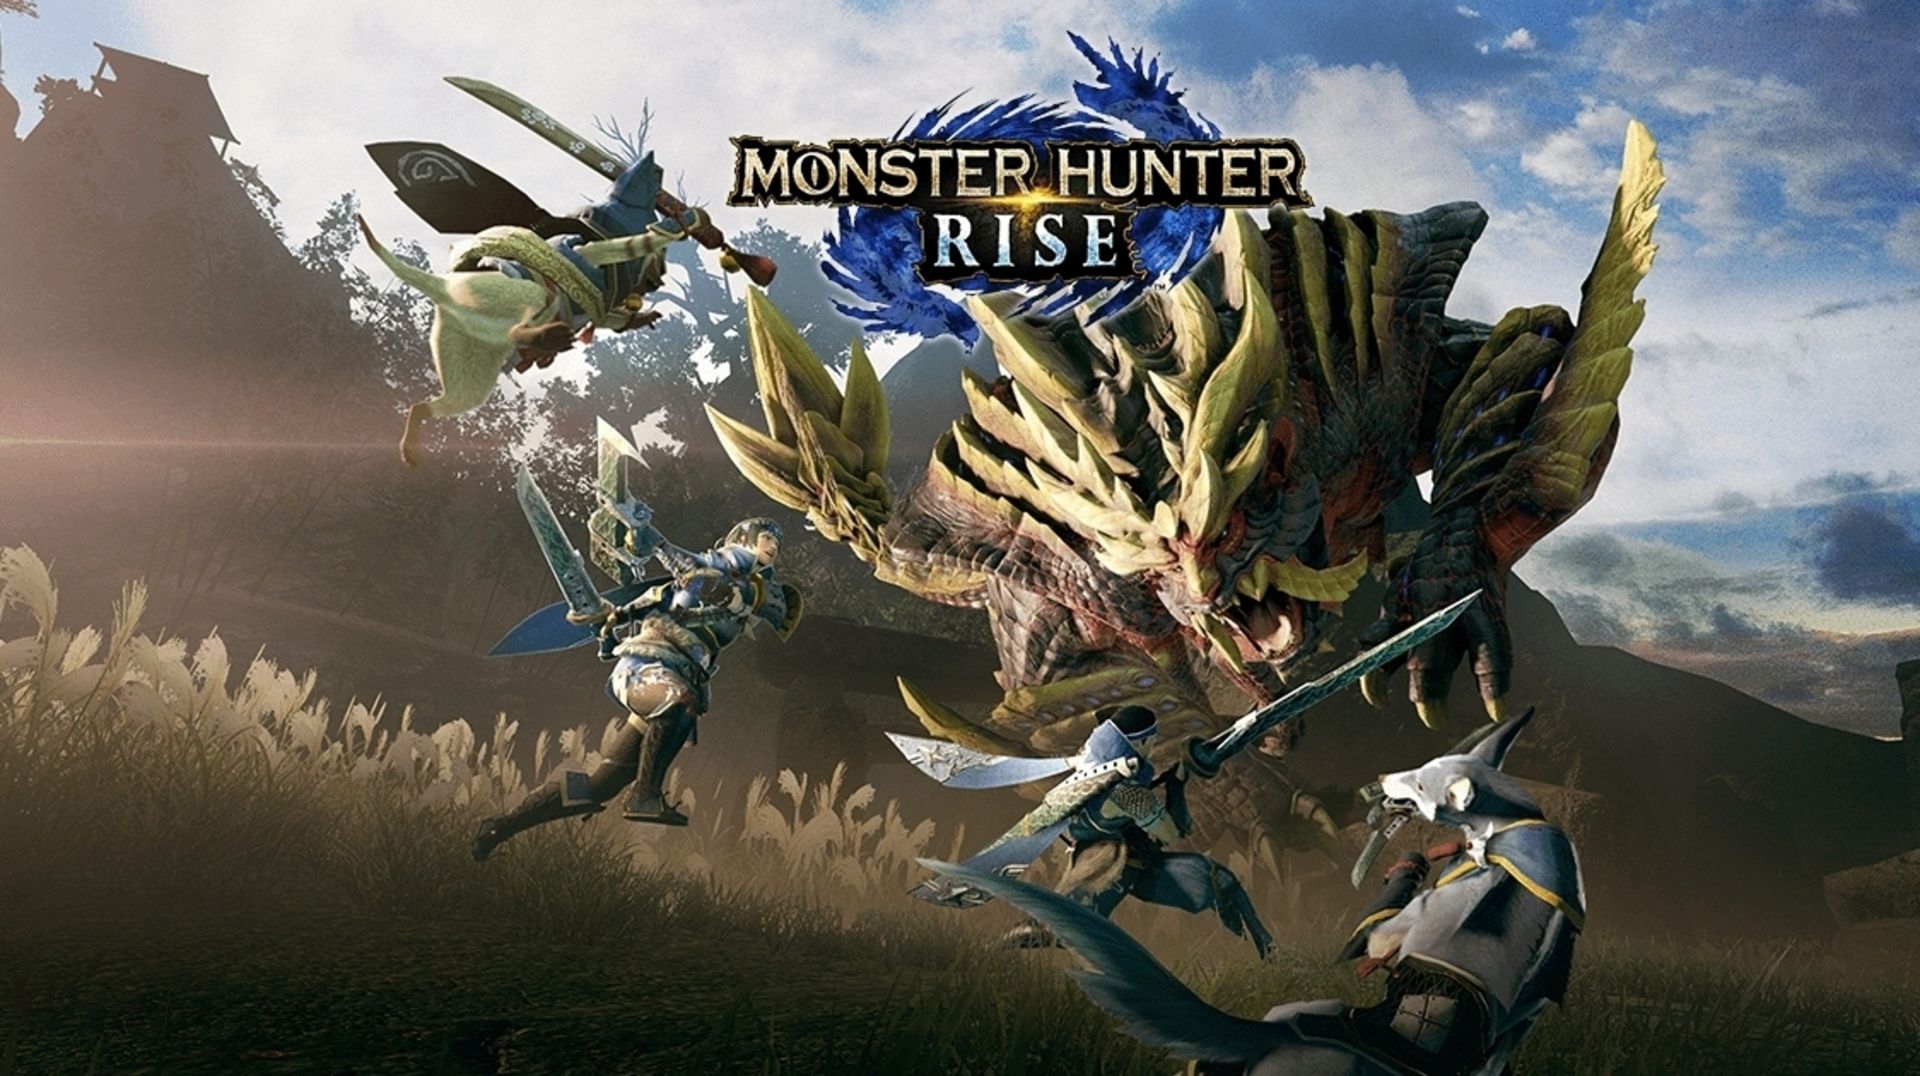 Monster Hinter Rise recibe un DLC gratuito